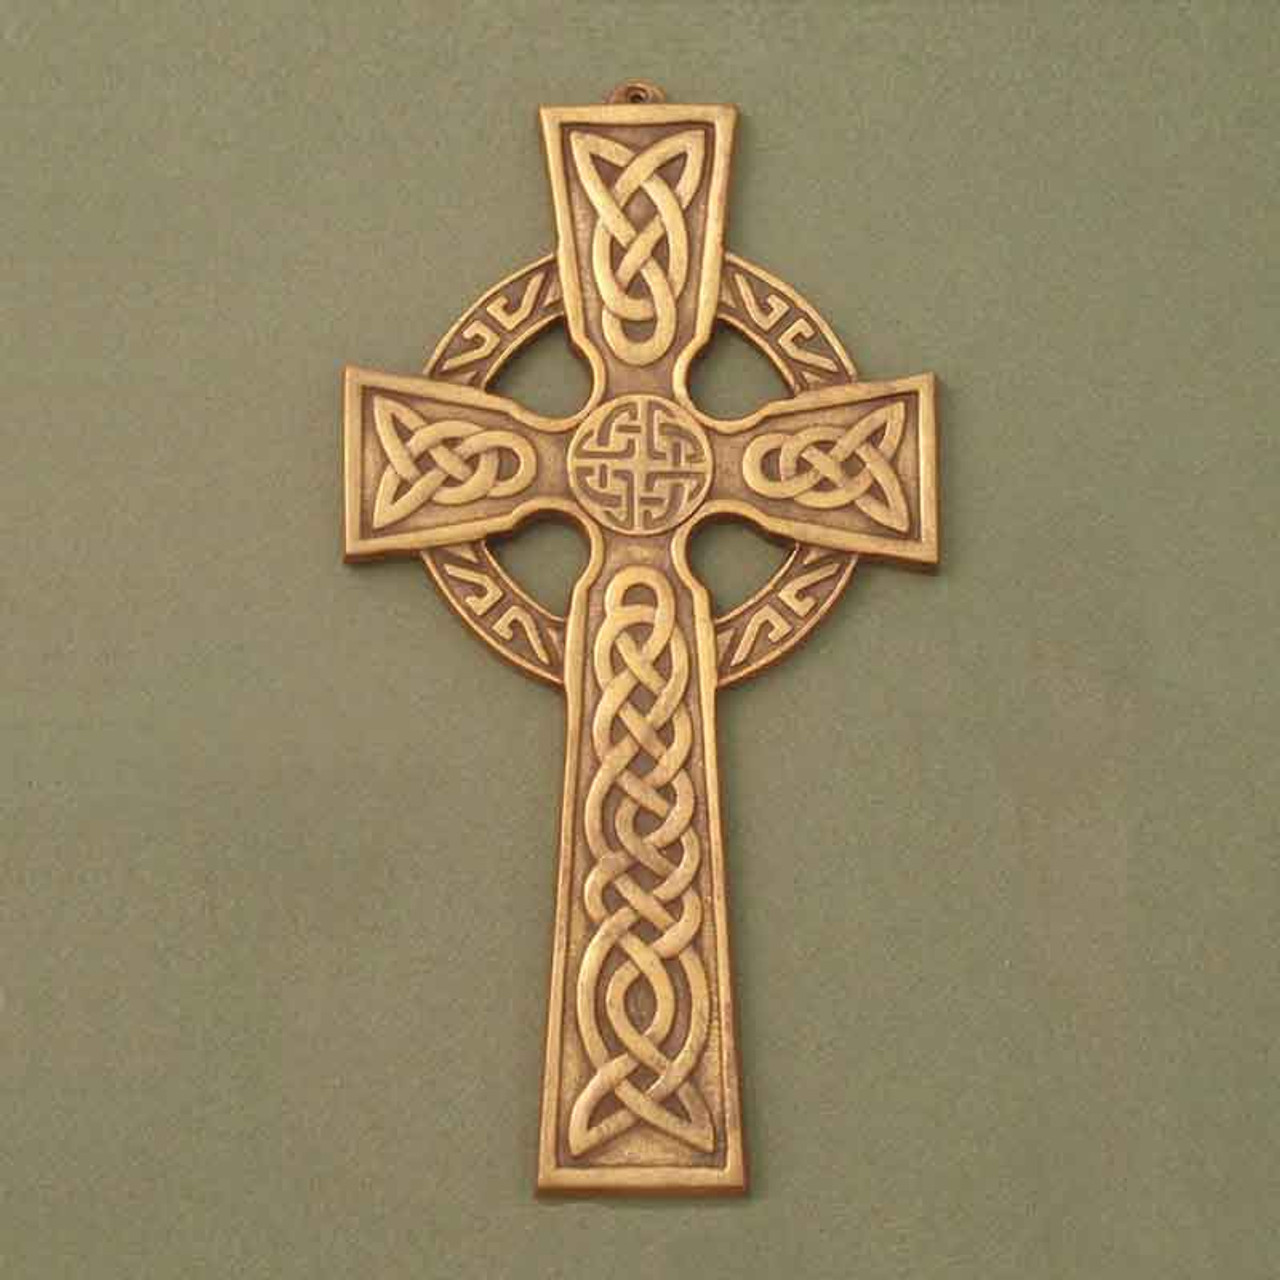 free celtic cross designs